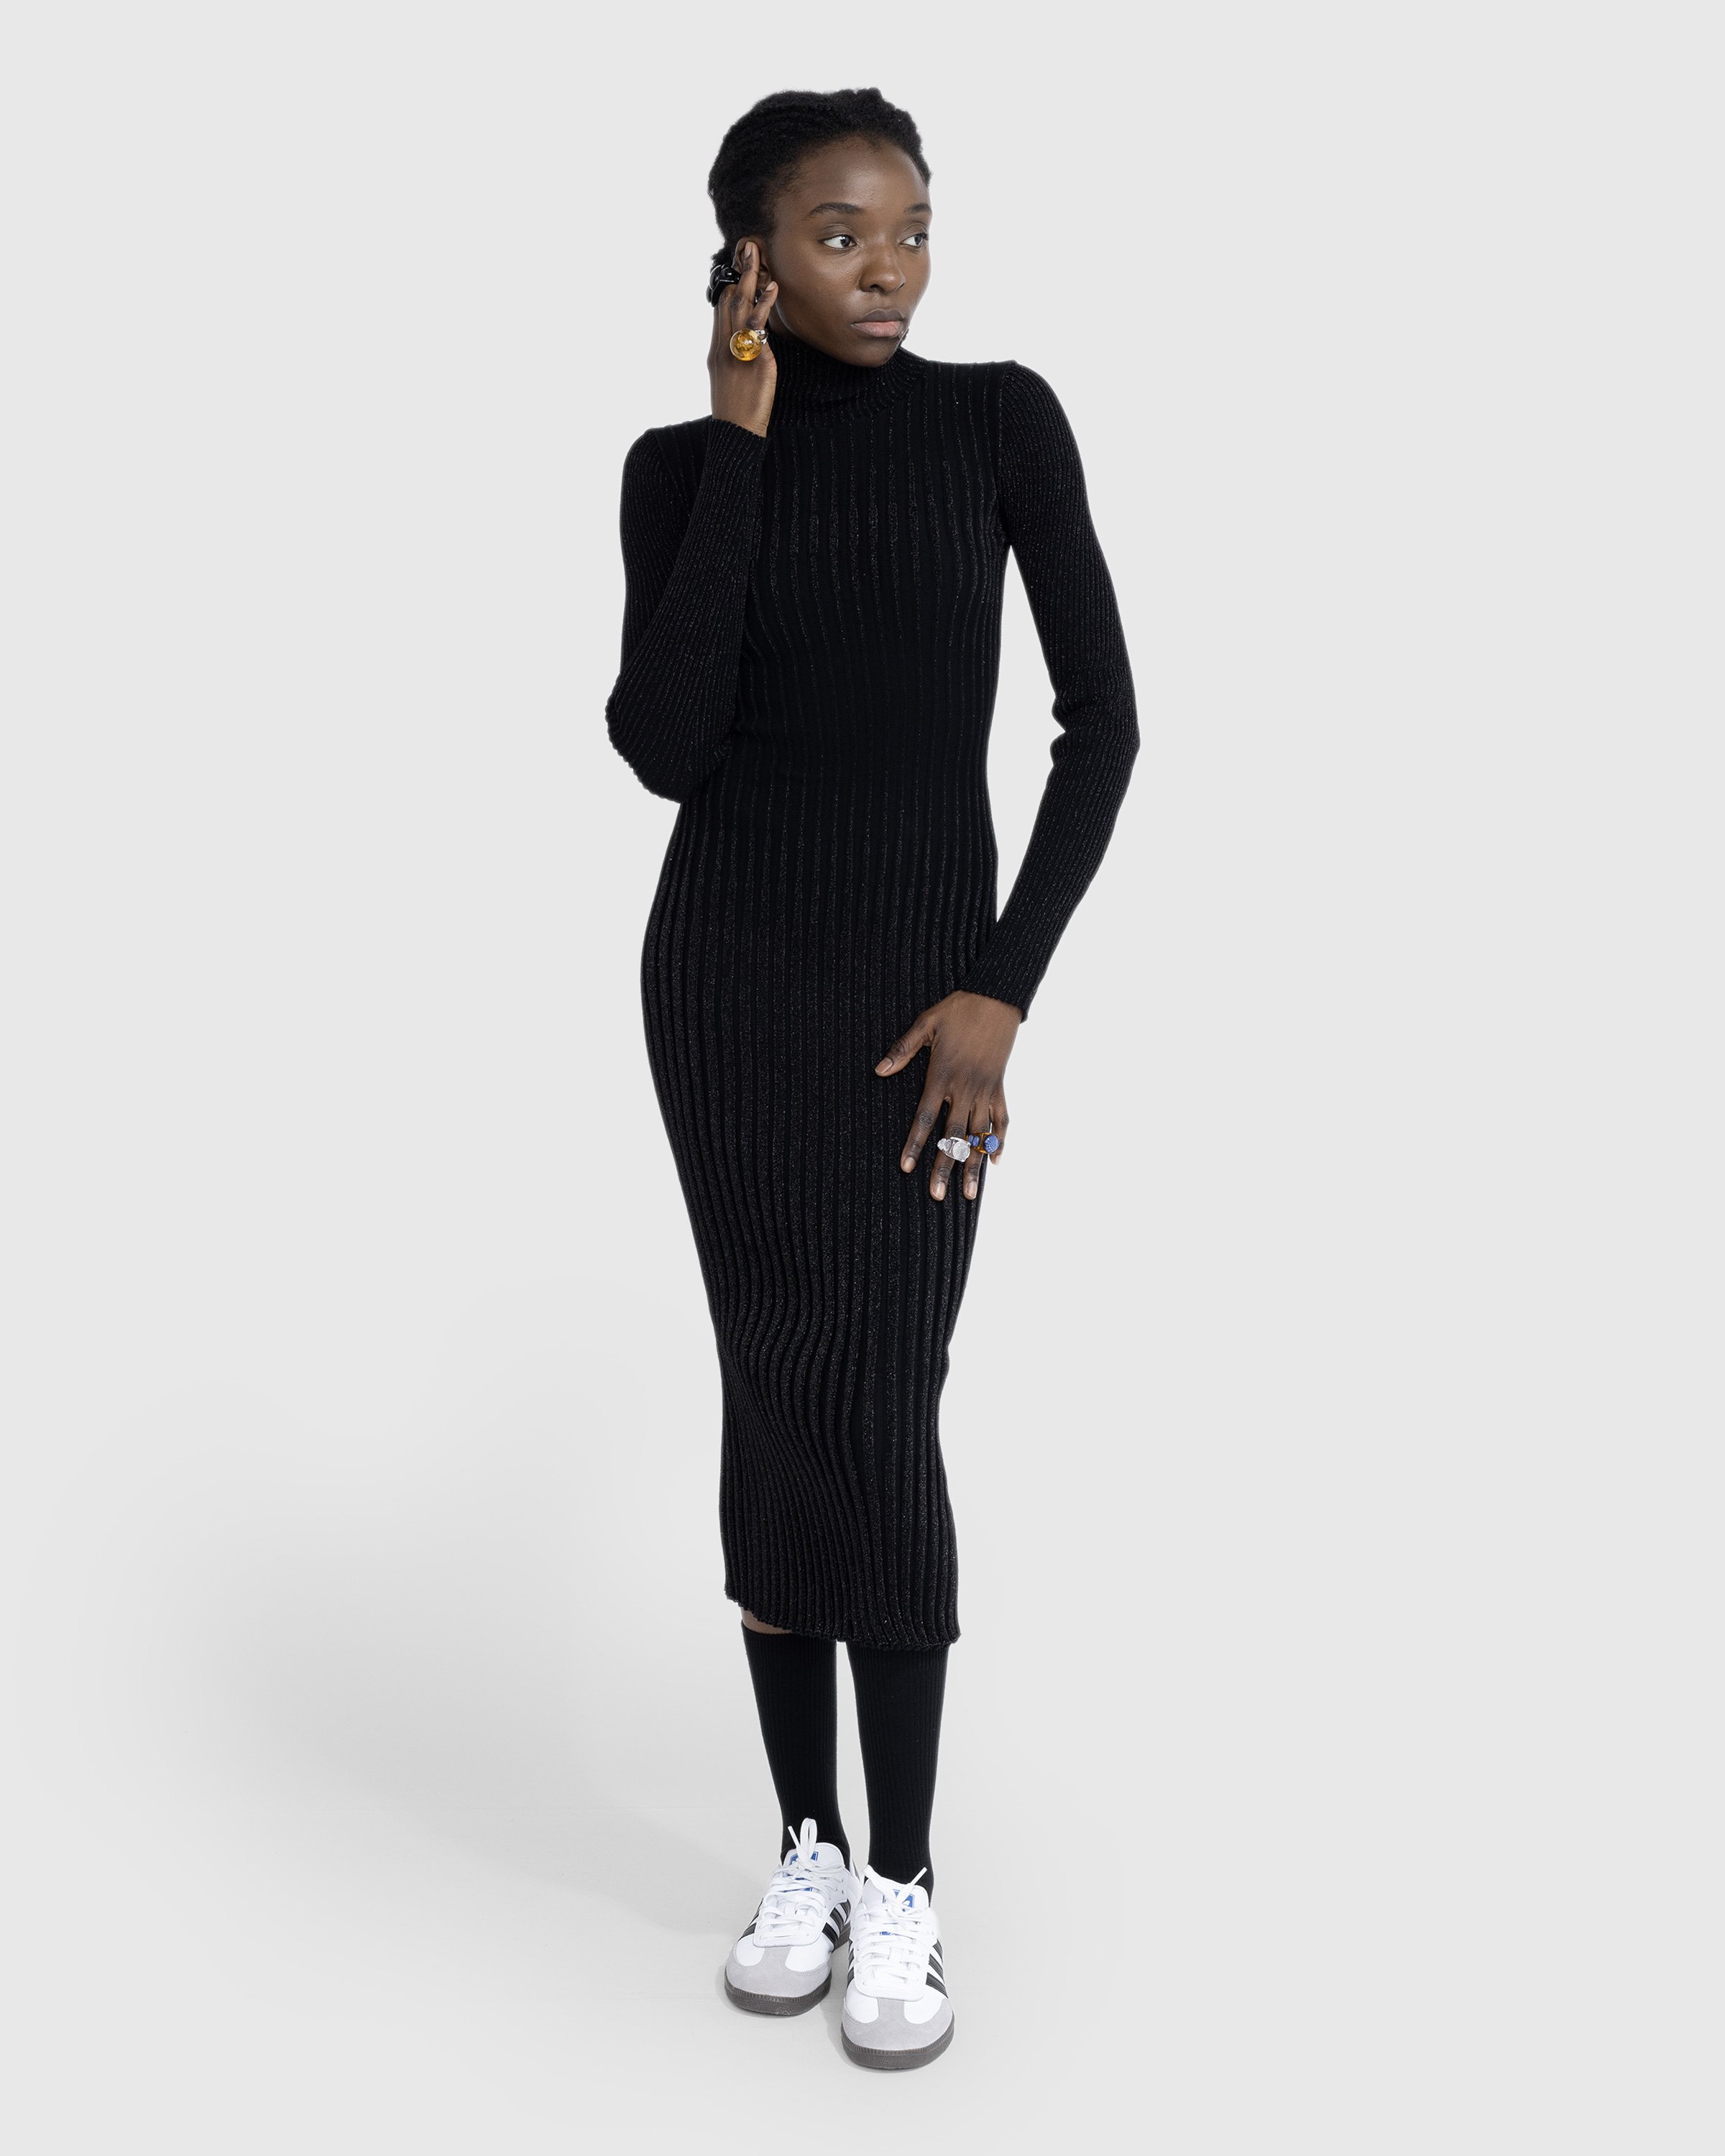 Jean Paul Gaultier - High Neck Long Dress Black - Clothing - Black - Image 2